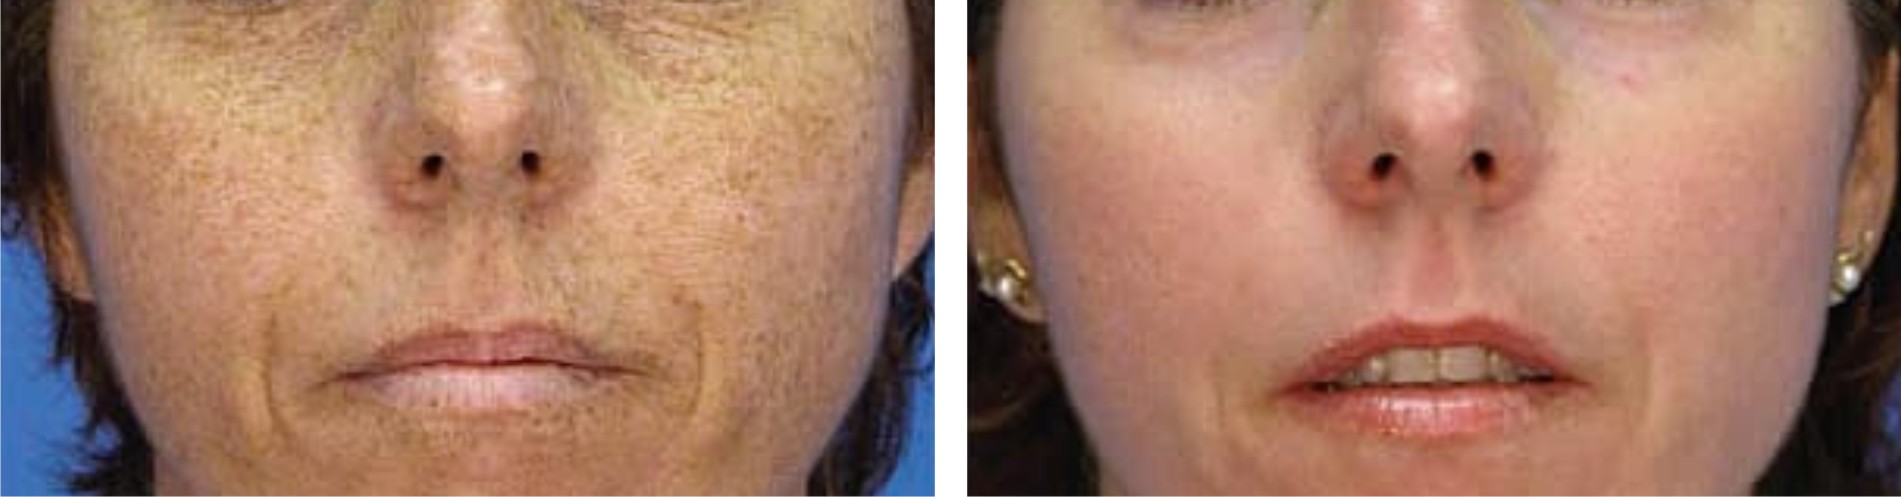 Laser Freckle Removal Image One